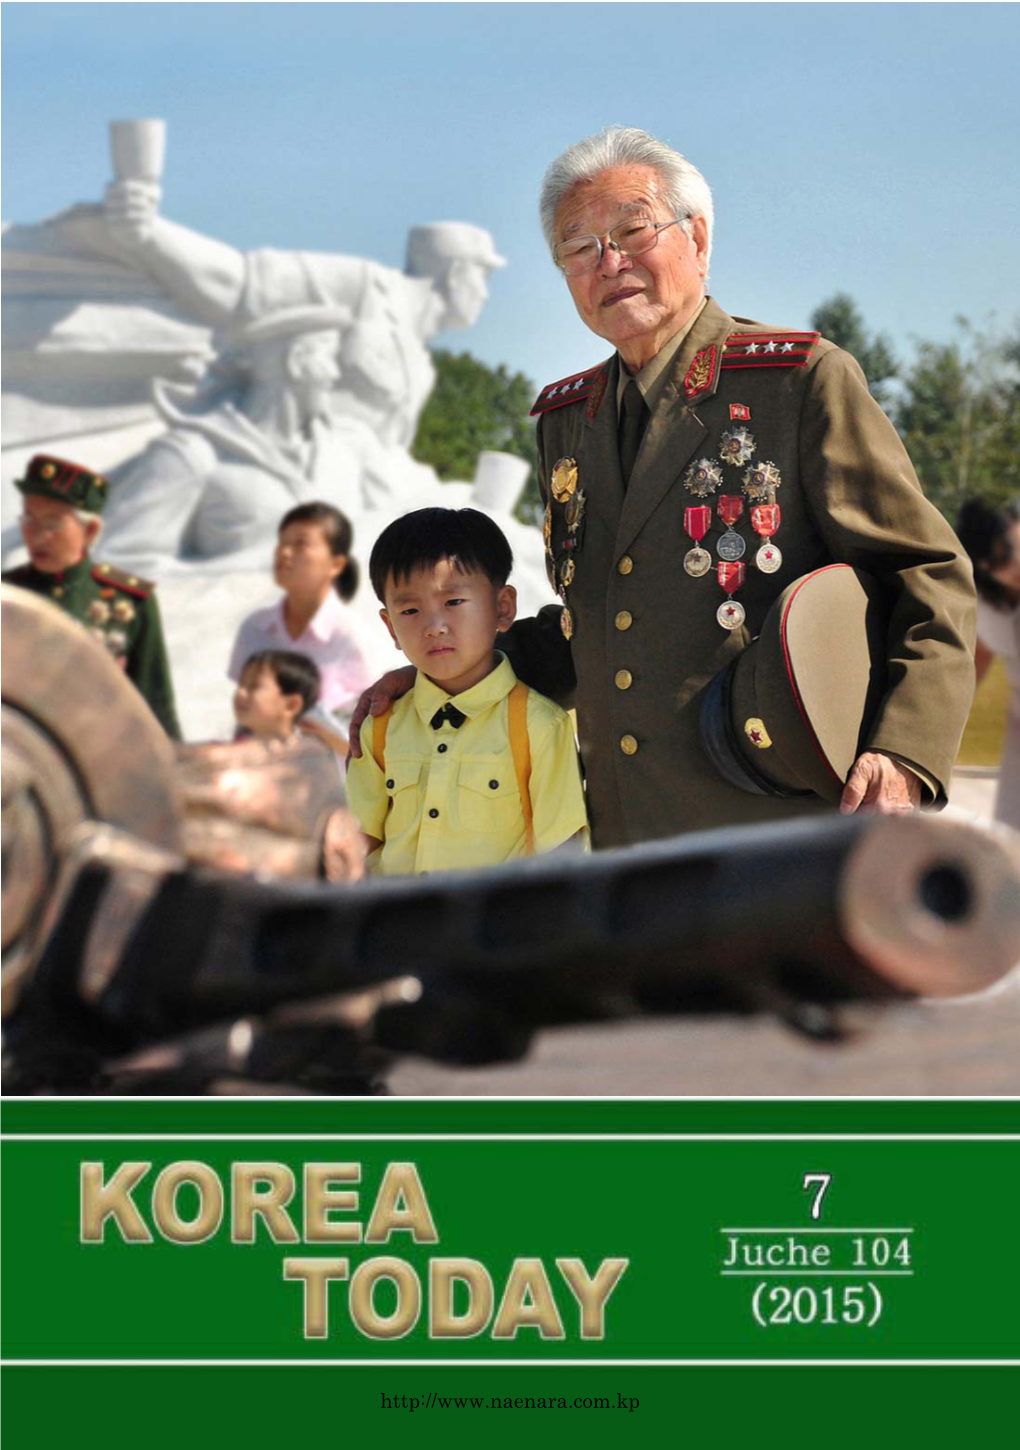 Pyongyang, DPRK E-Mail: Flph@Star-Co.Net.Kp